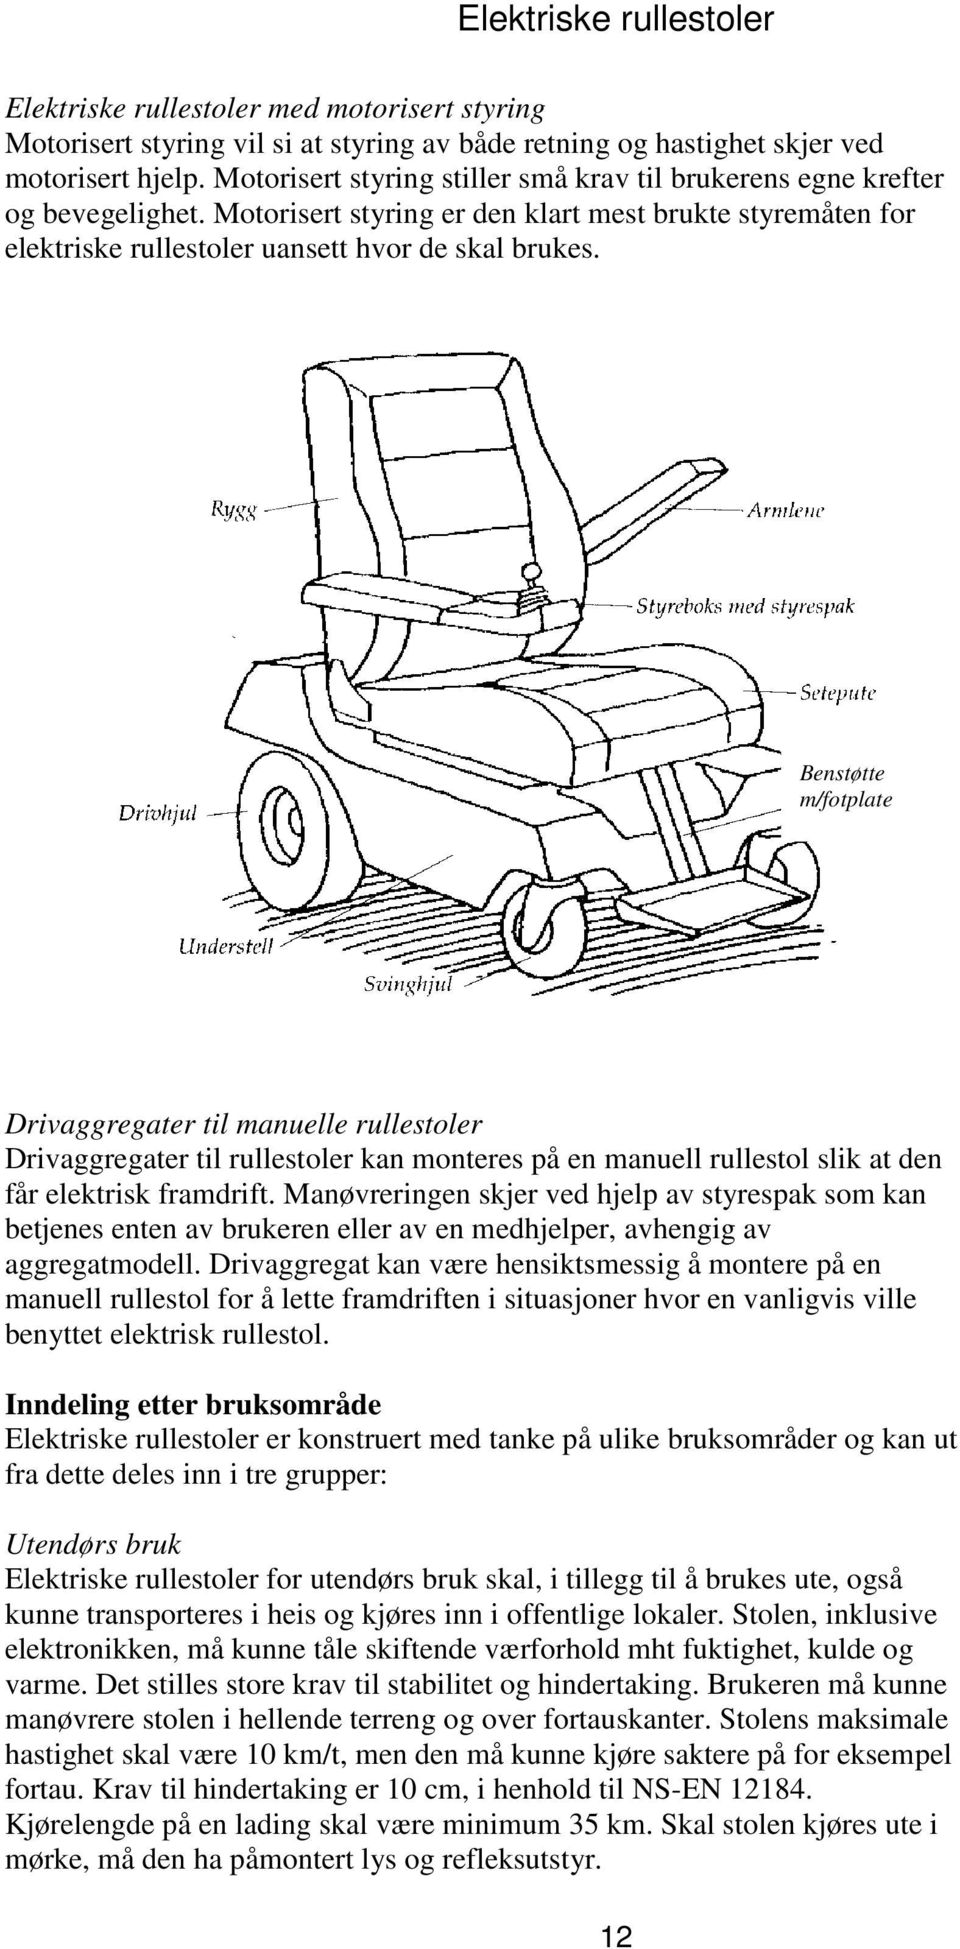 Benstøtte m/fotplate Drivaggregater til manuelle rullestoler Drivaggregater til rullestoler kan monteres på en manuell rullestol slik at den får elektrisk framdrift.